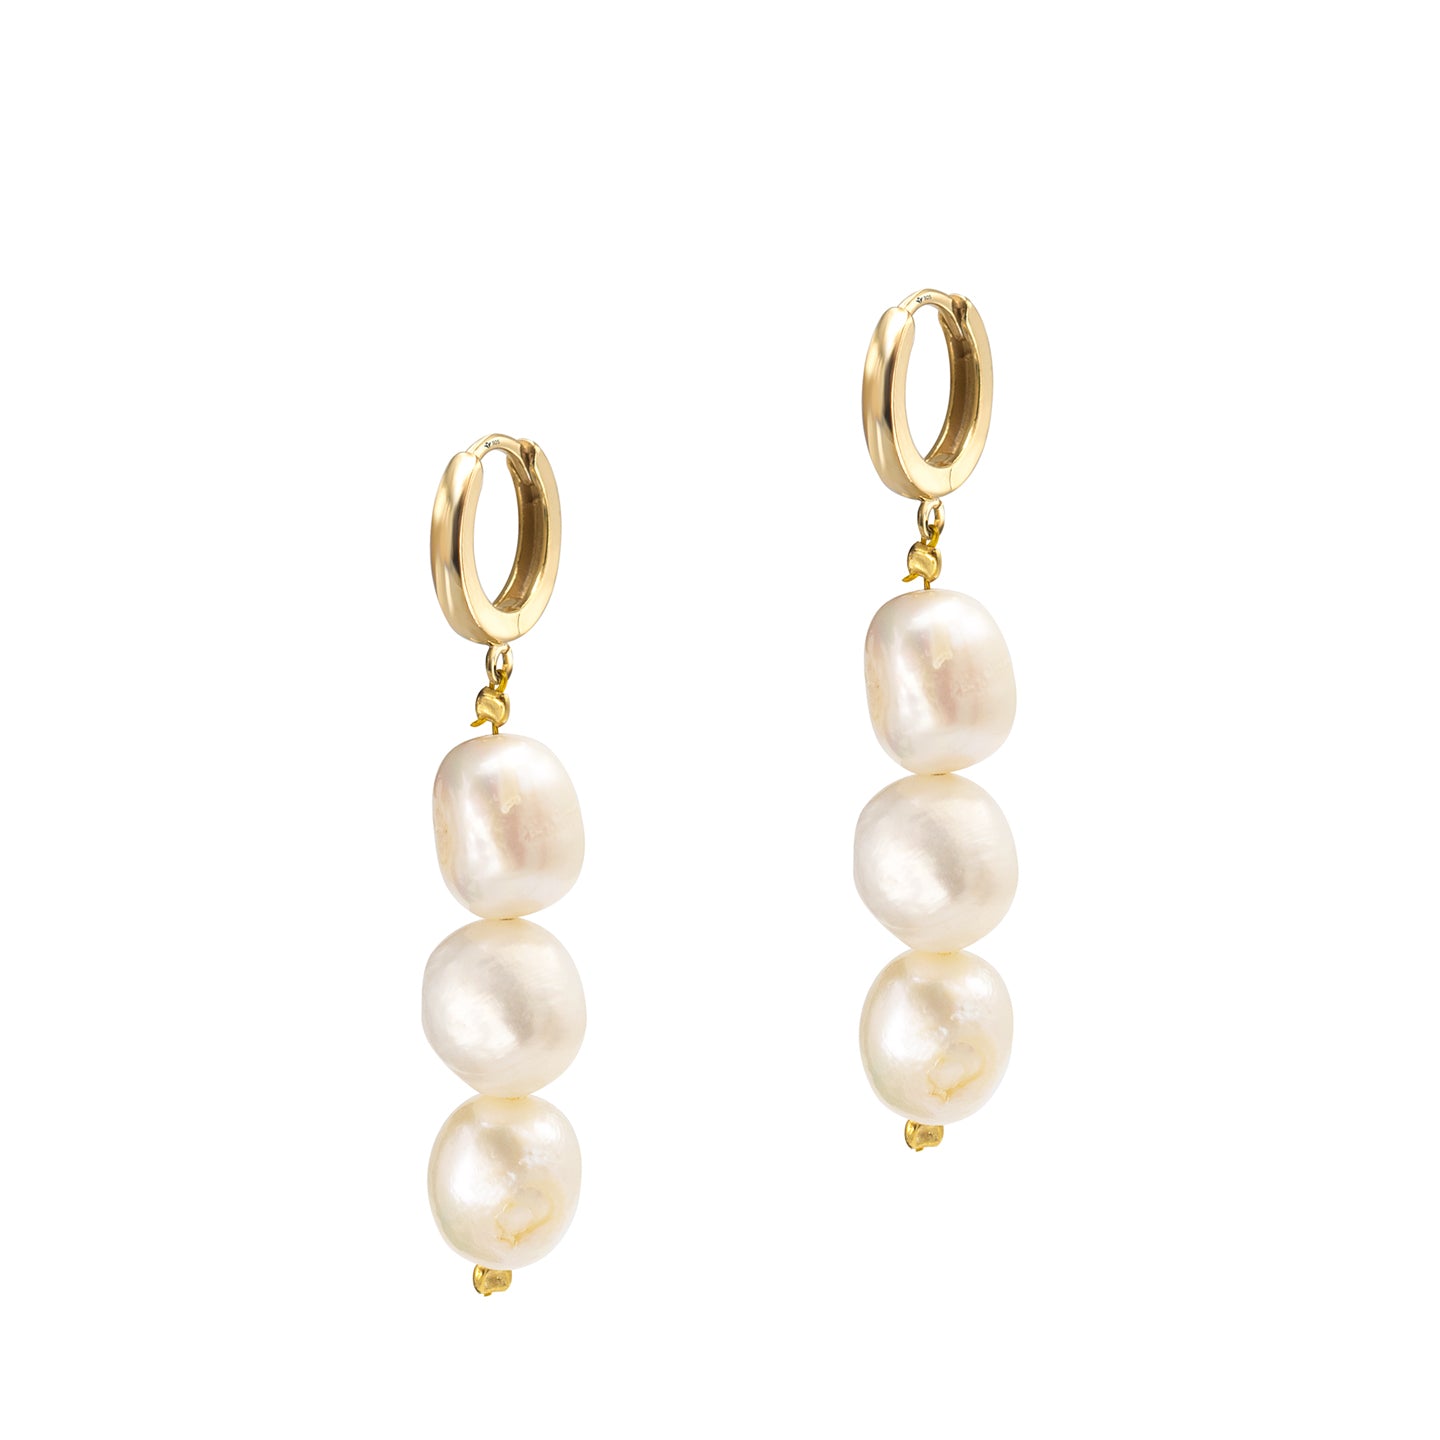 Cercei lungi argint cu perle Freedom Island - placati aur galben 18K